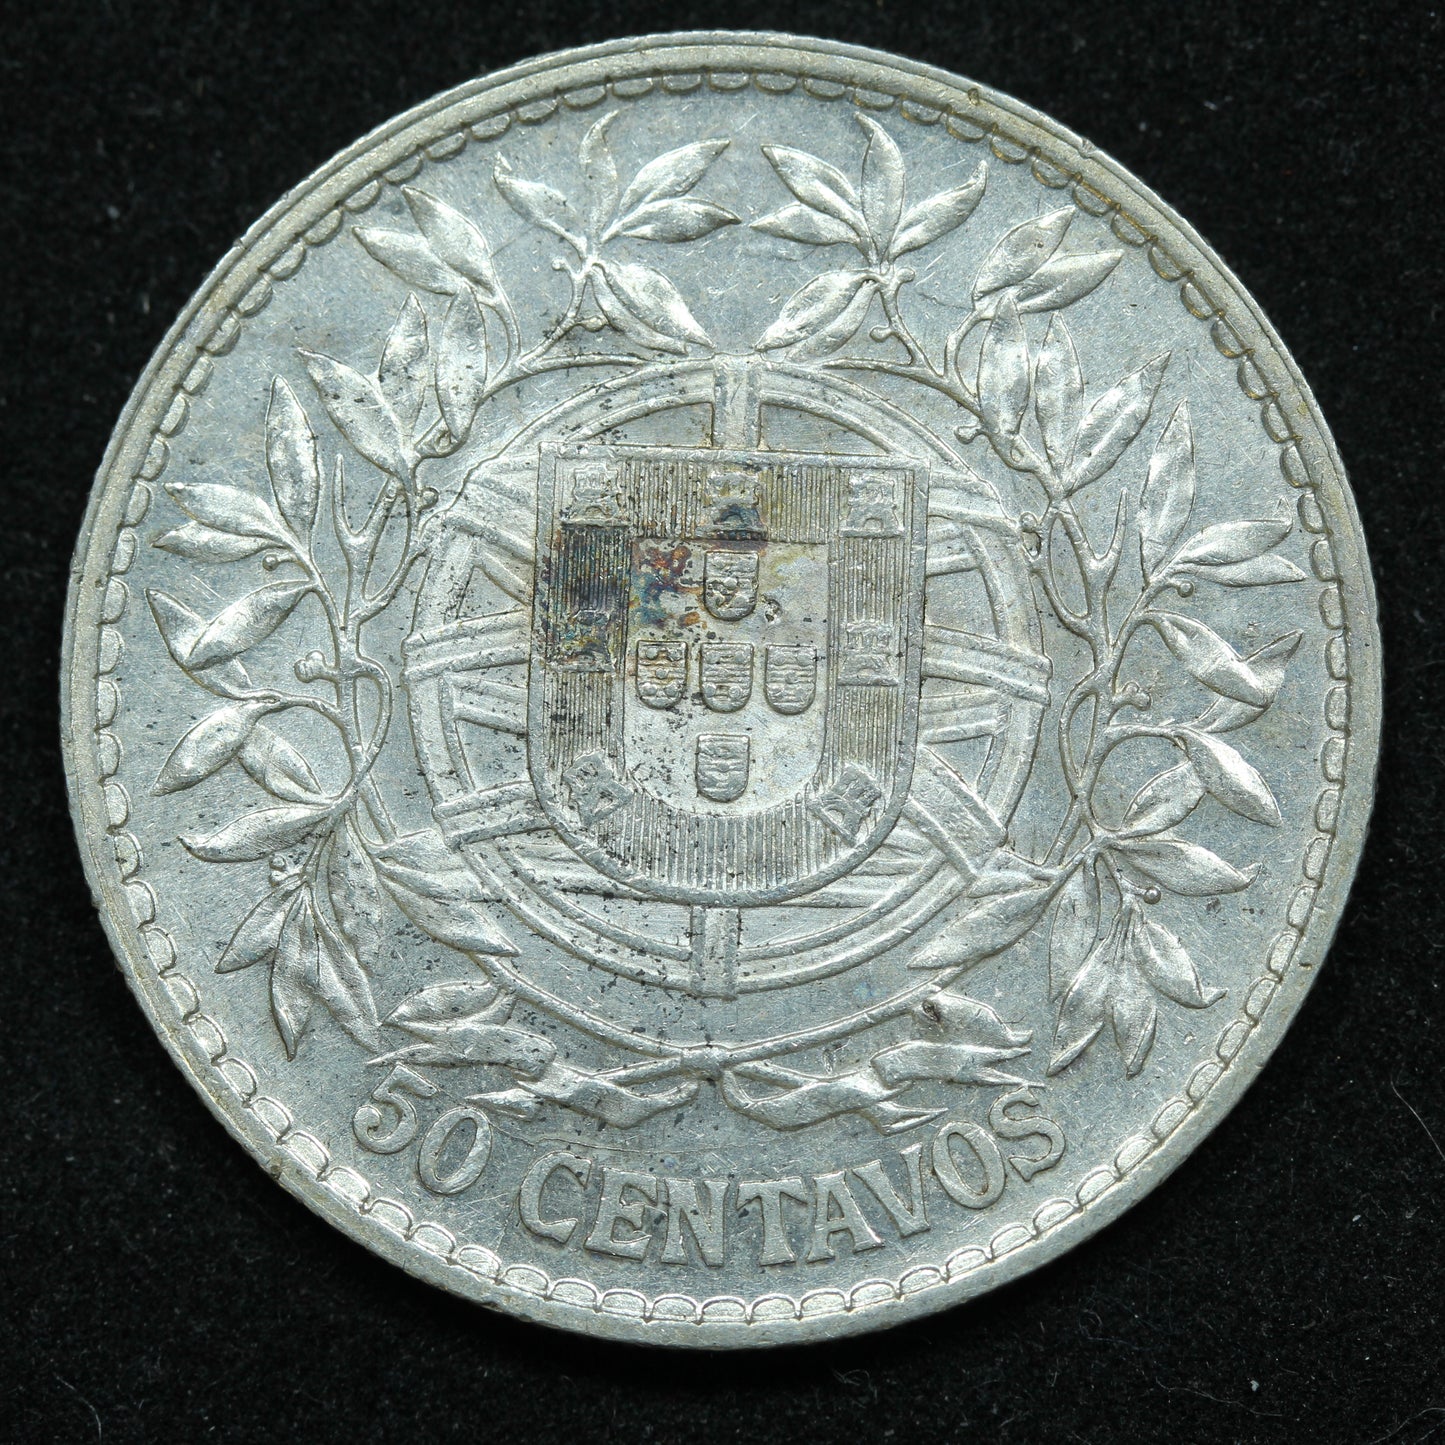 1913 50 Centavos Portugal Silver Coin -  KM# 561